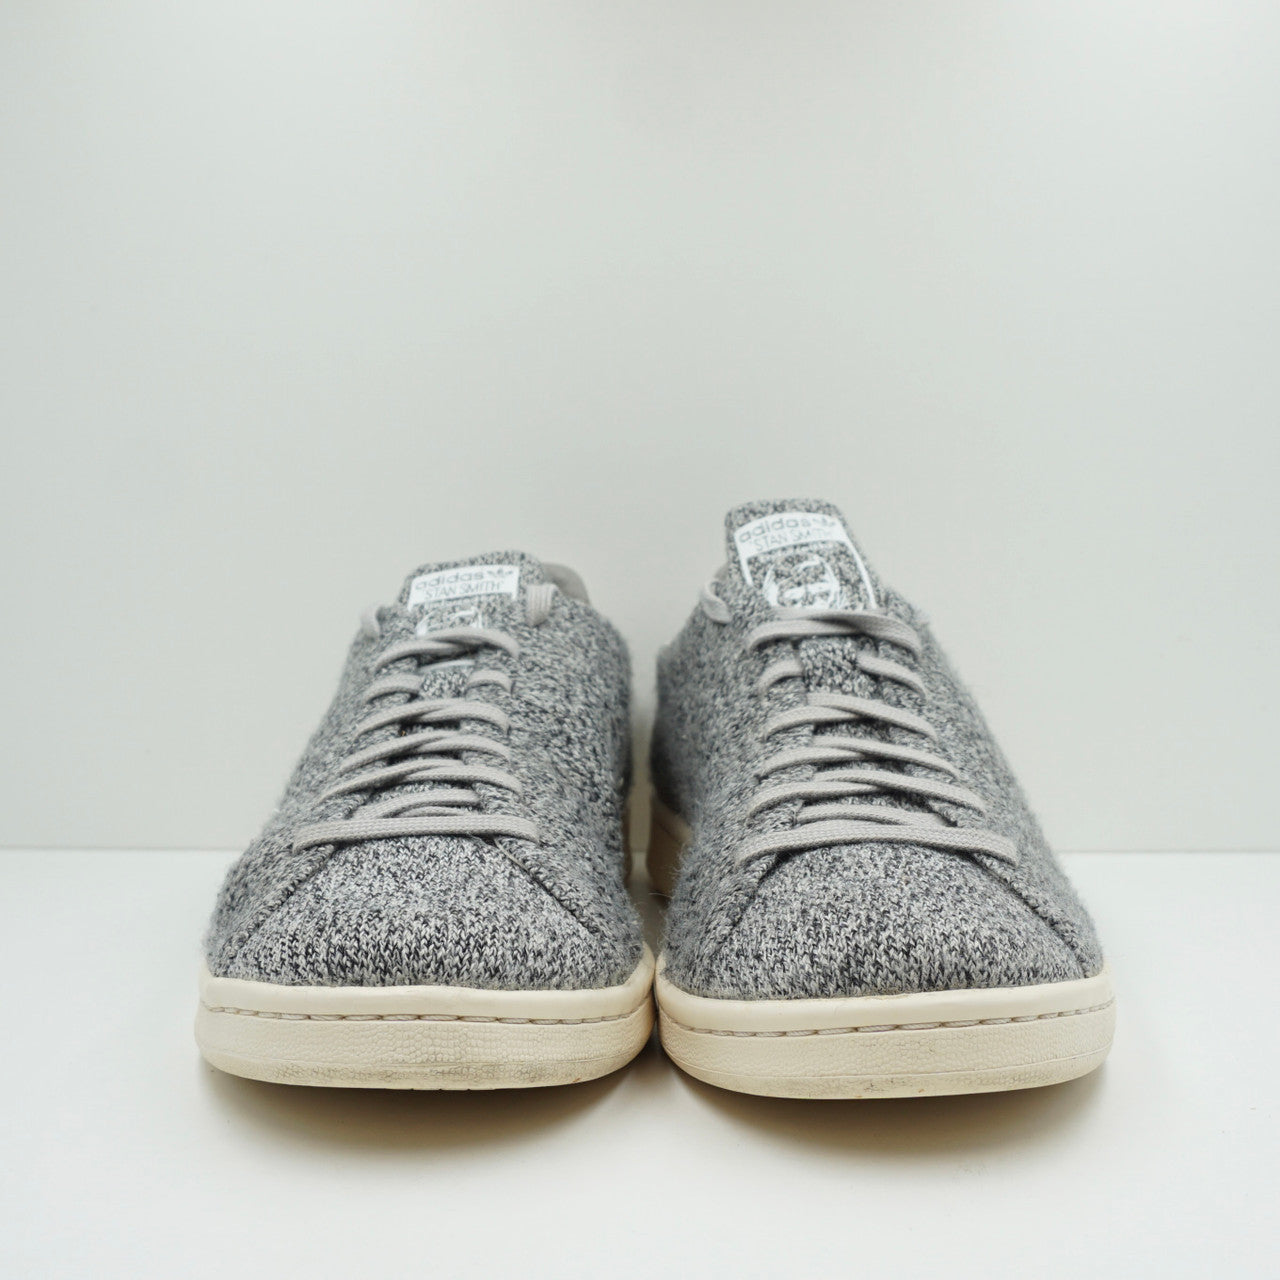 Adidas Stan Smith Primeknit Wool